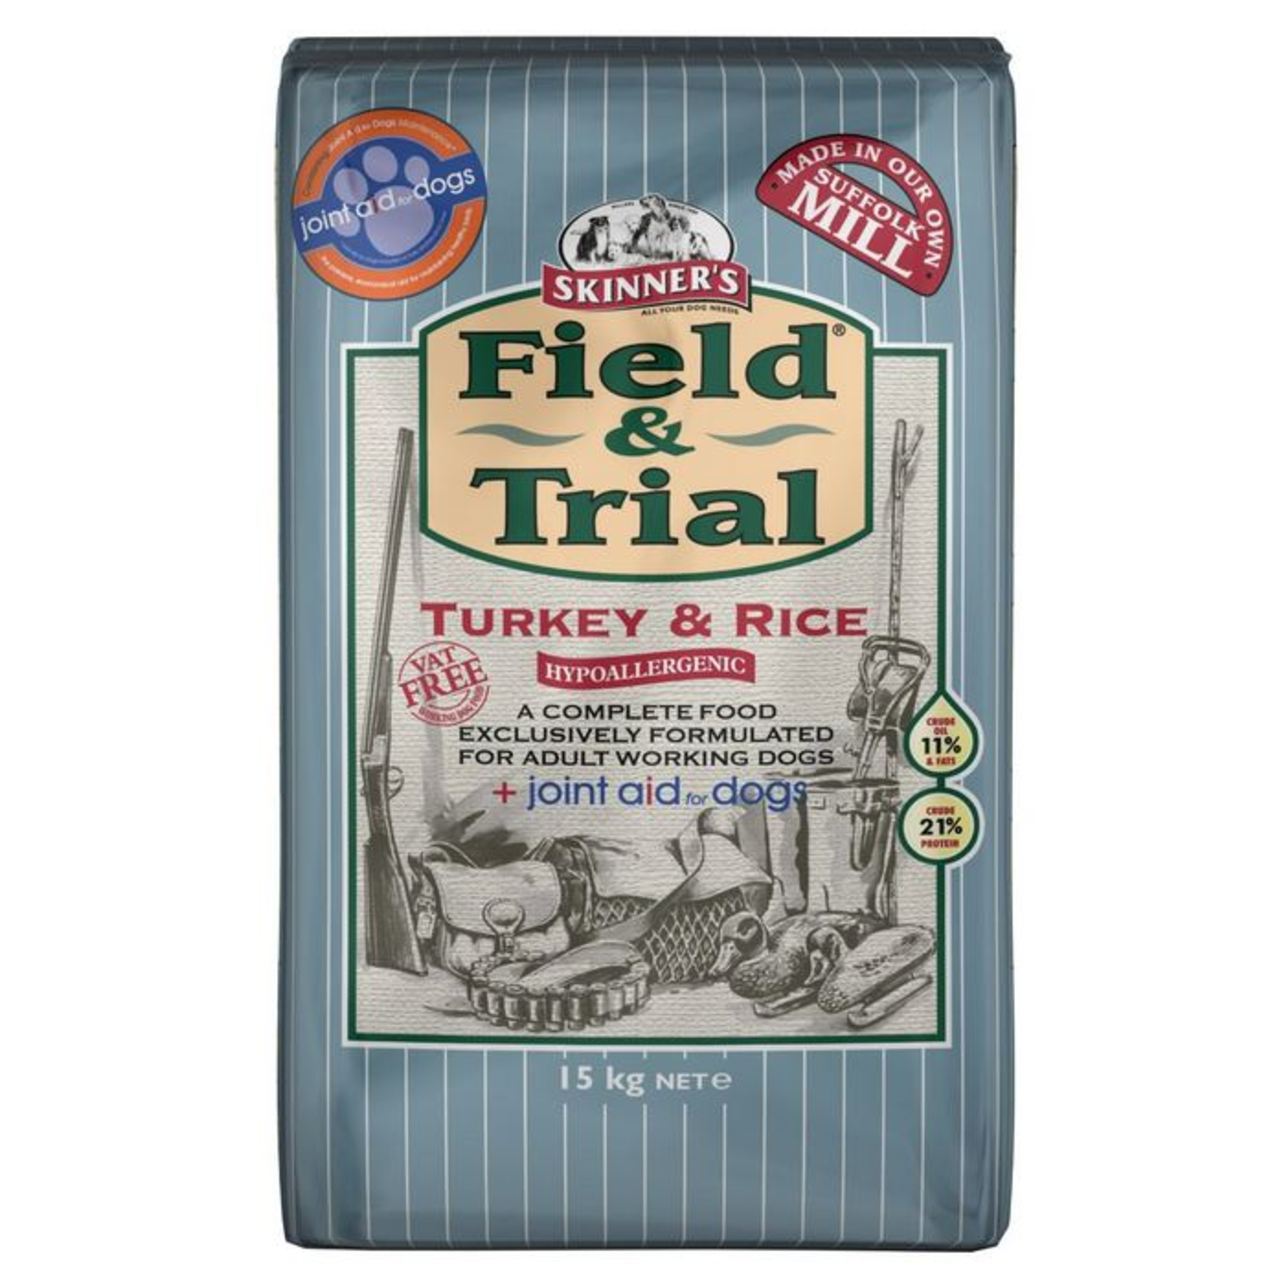 Skinner's Field & Trial Turkey & Rice Hypoallergenic 15kg